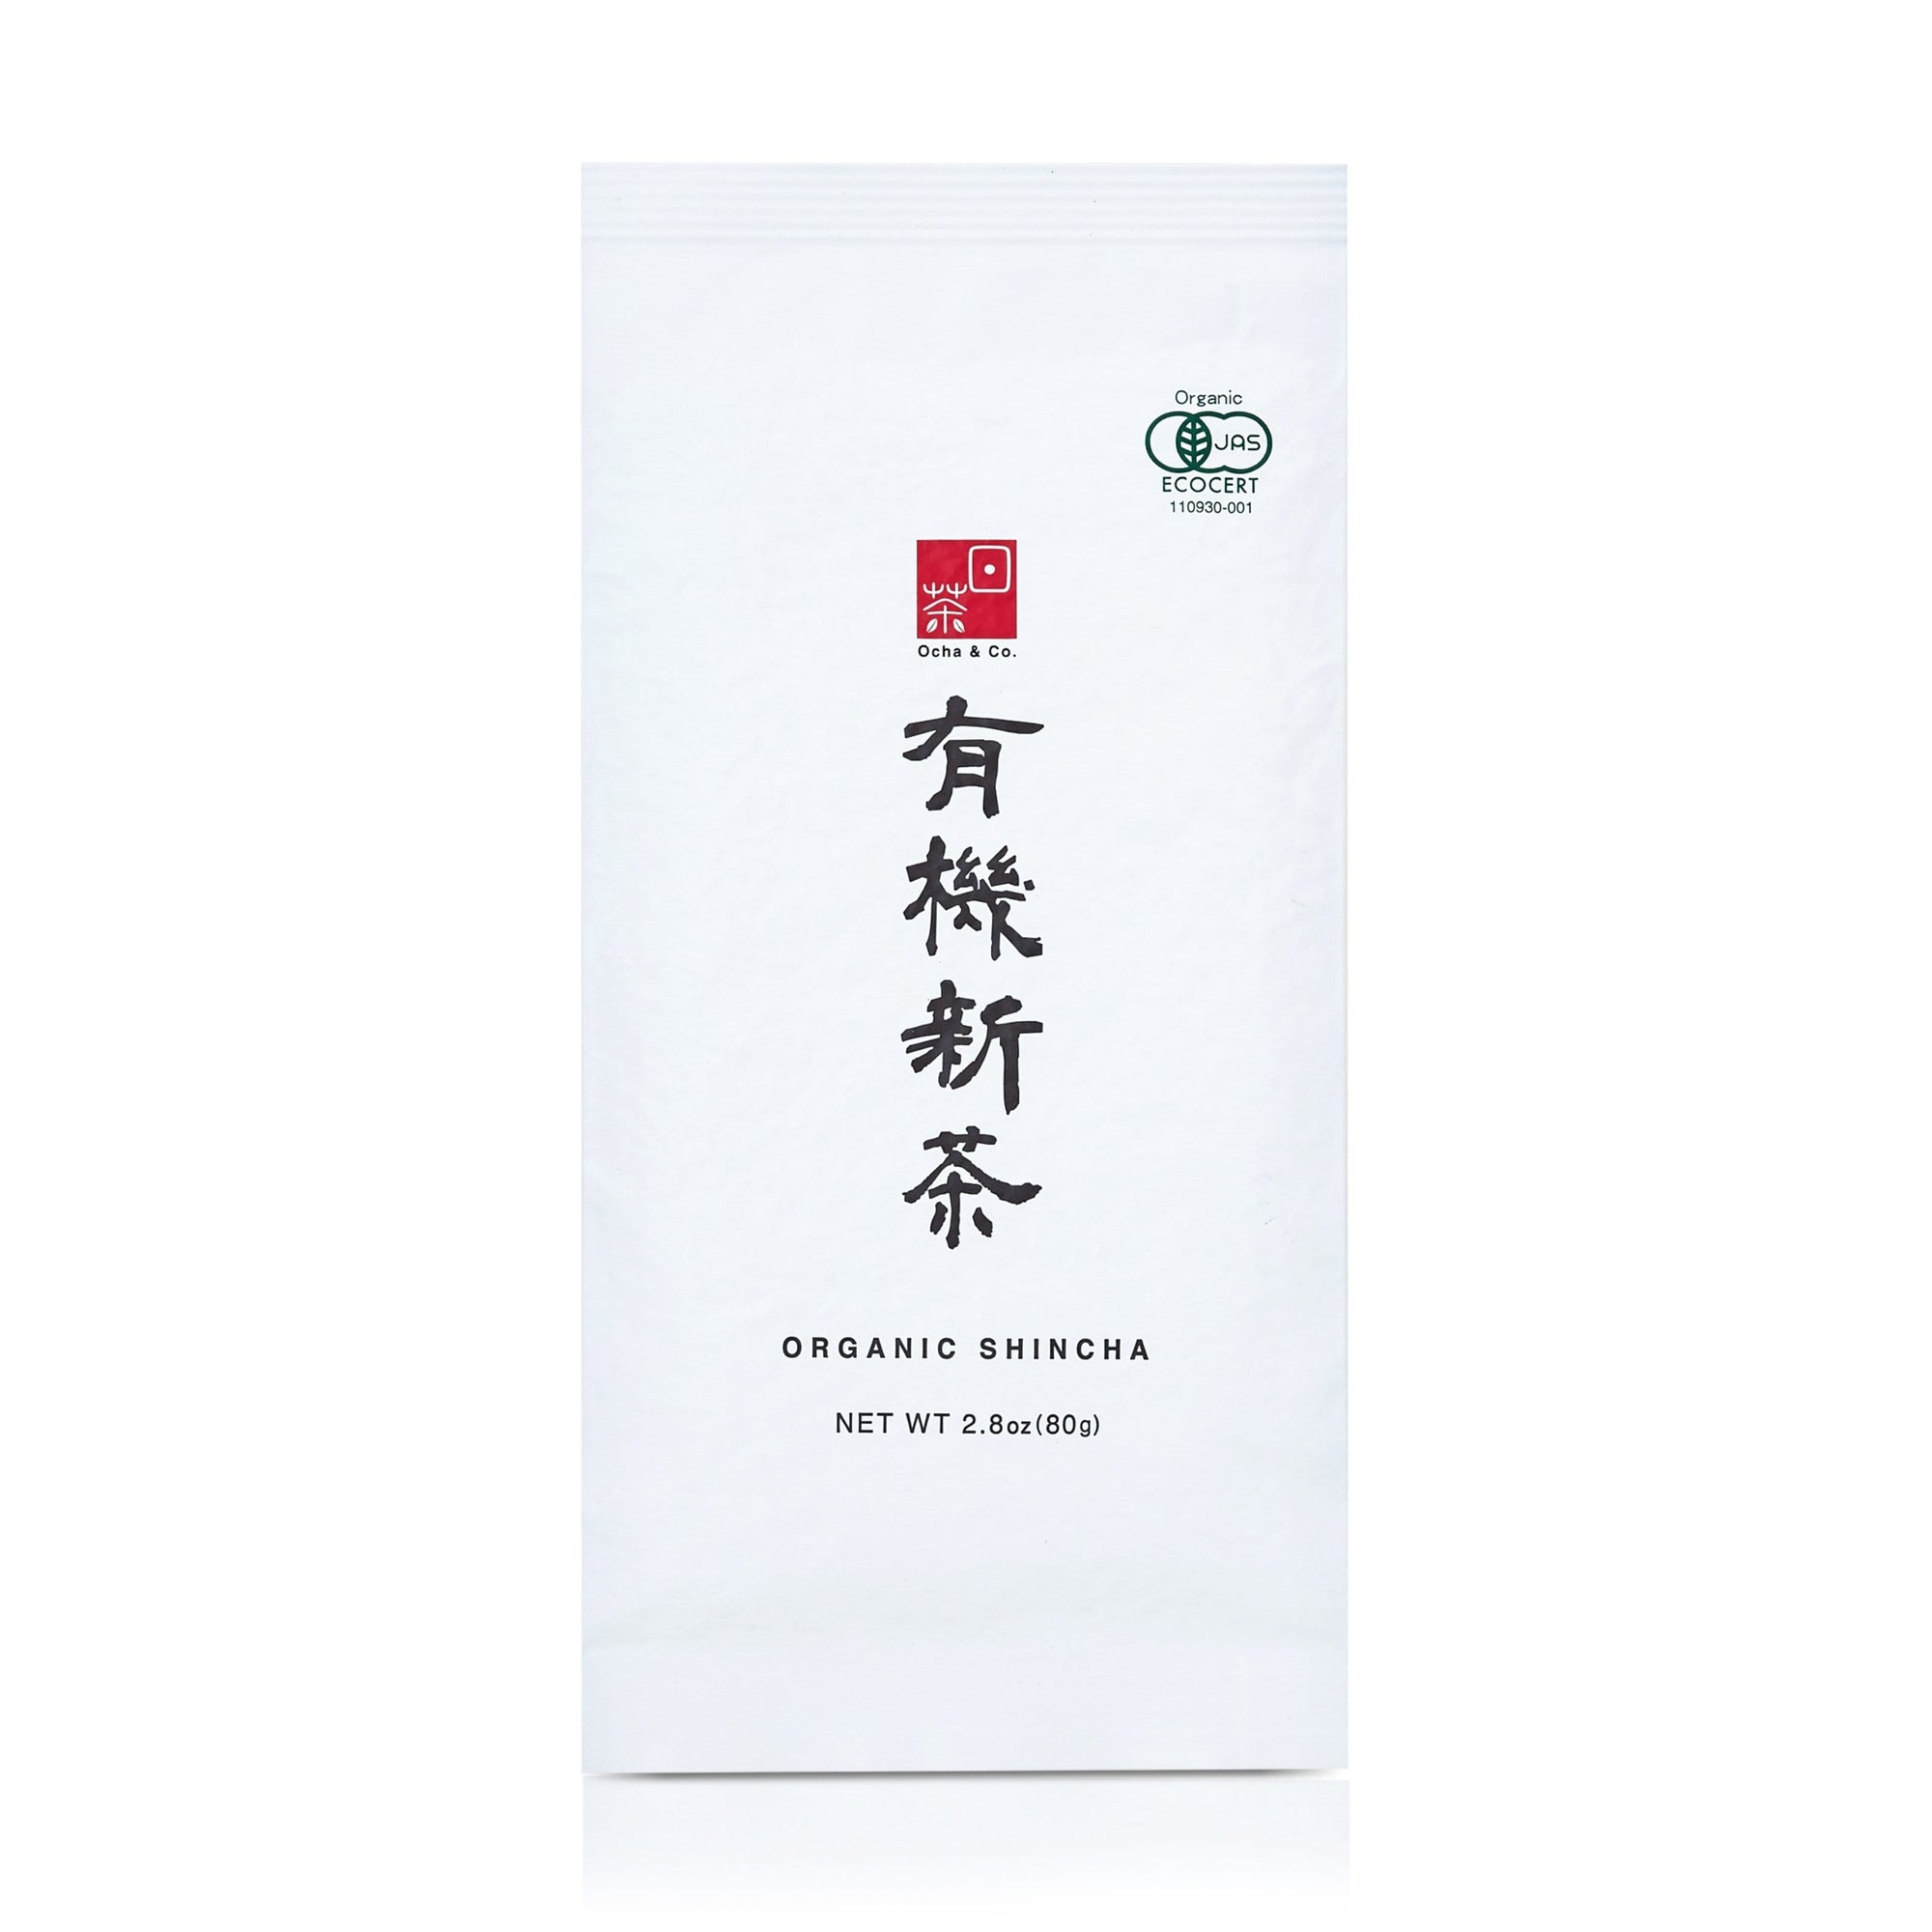 Organic Shincha First Crop Green Tea